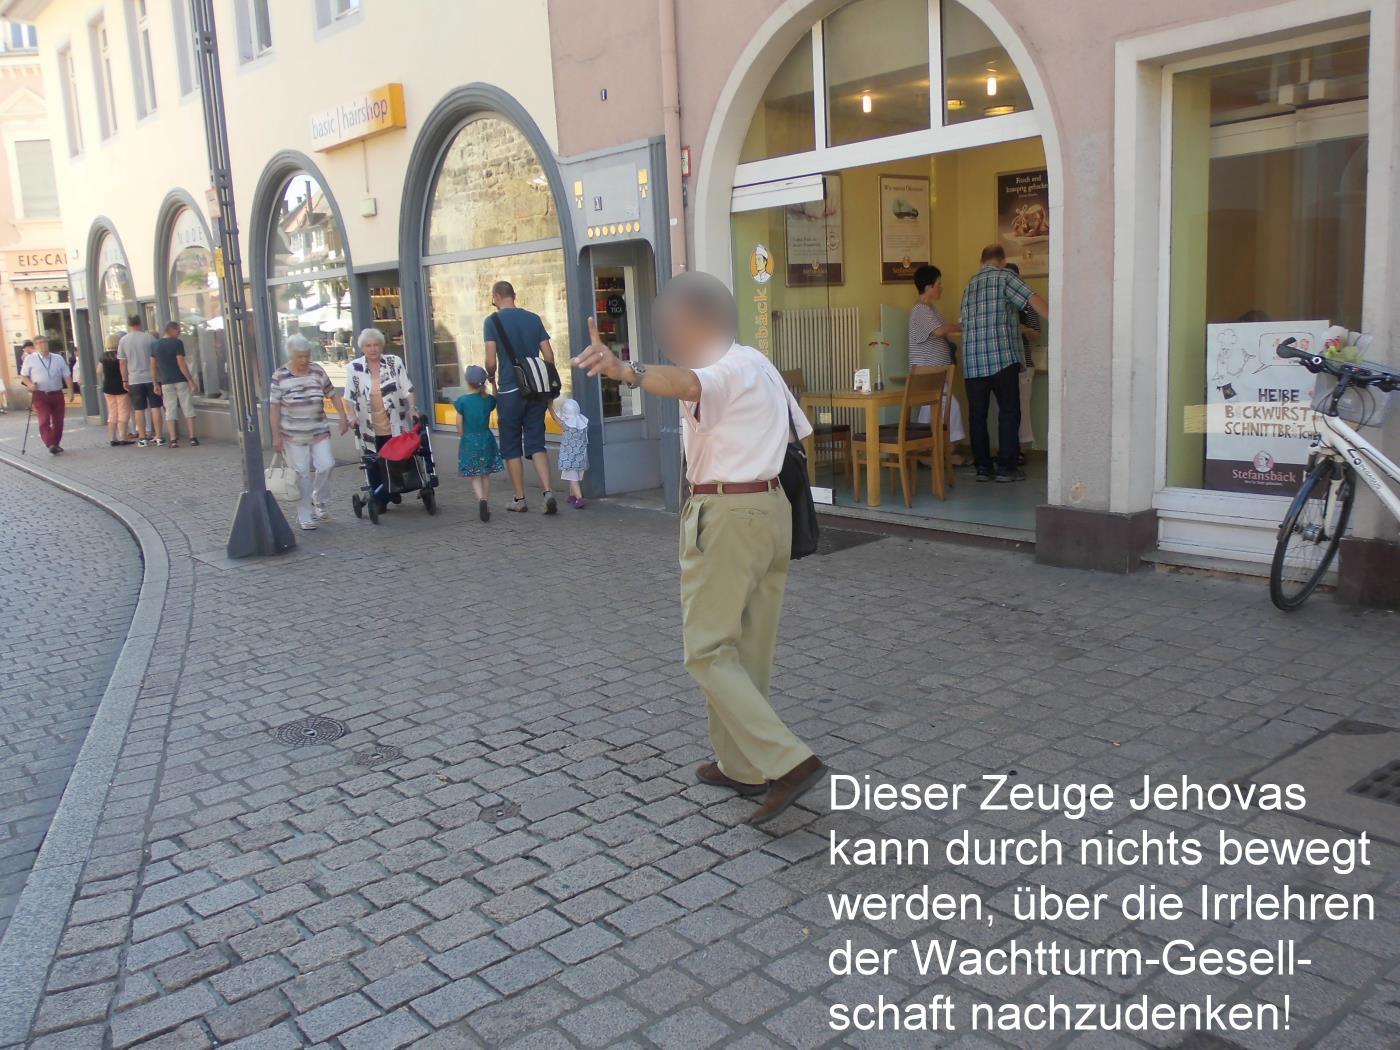 Jehovah's Witnesses in Speyer: Spider seeks flies